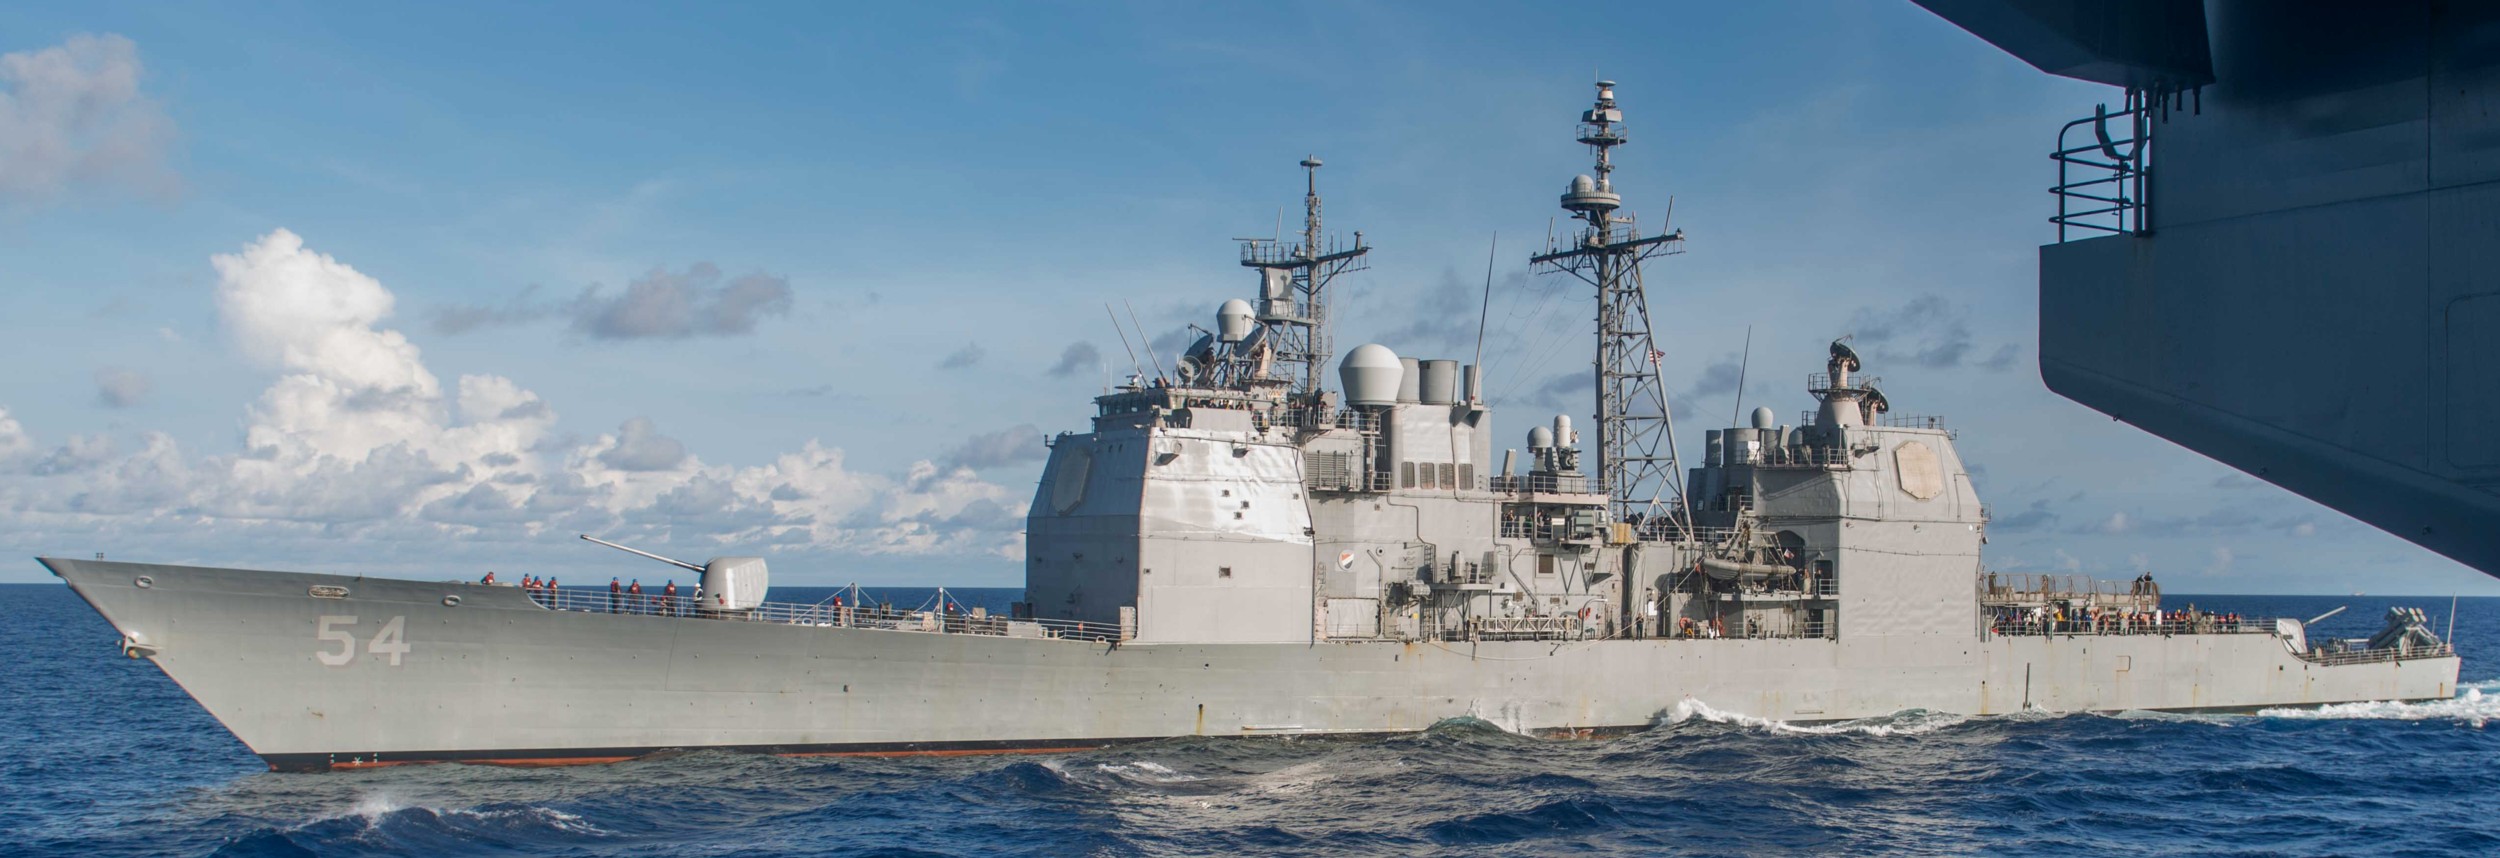 cg-54 uss antietam ticonderoga class guided missile cruiser aegis us navy 130